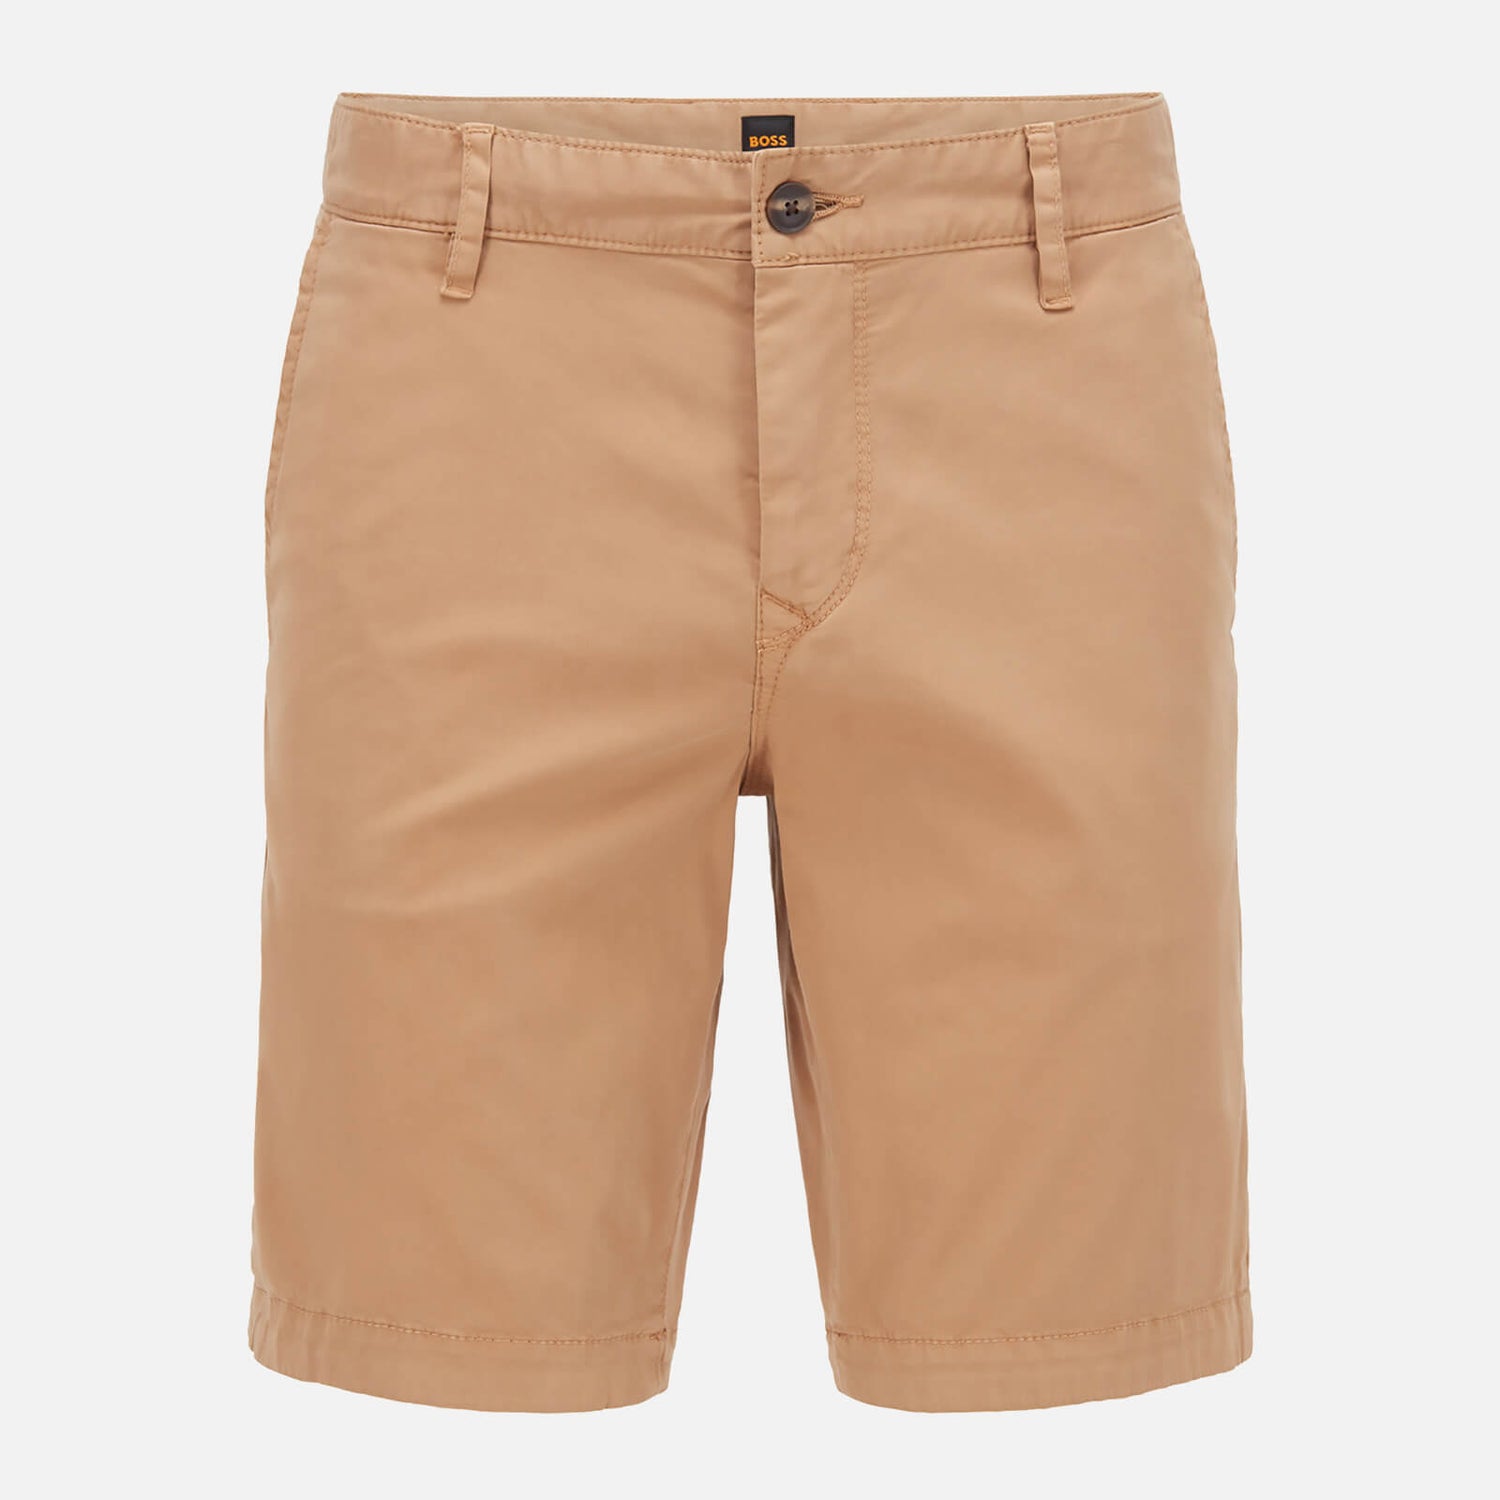 BOSS Orange Men's Schino Slim Fit Shorts - Medium Beige